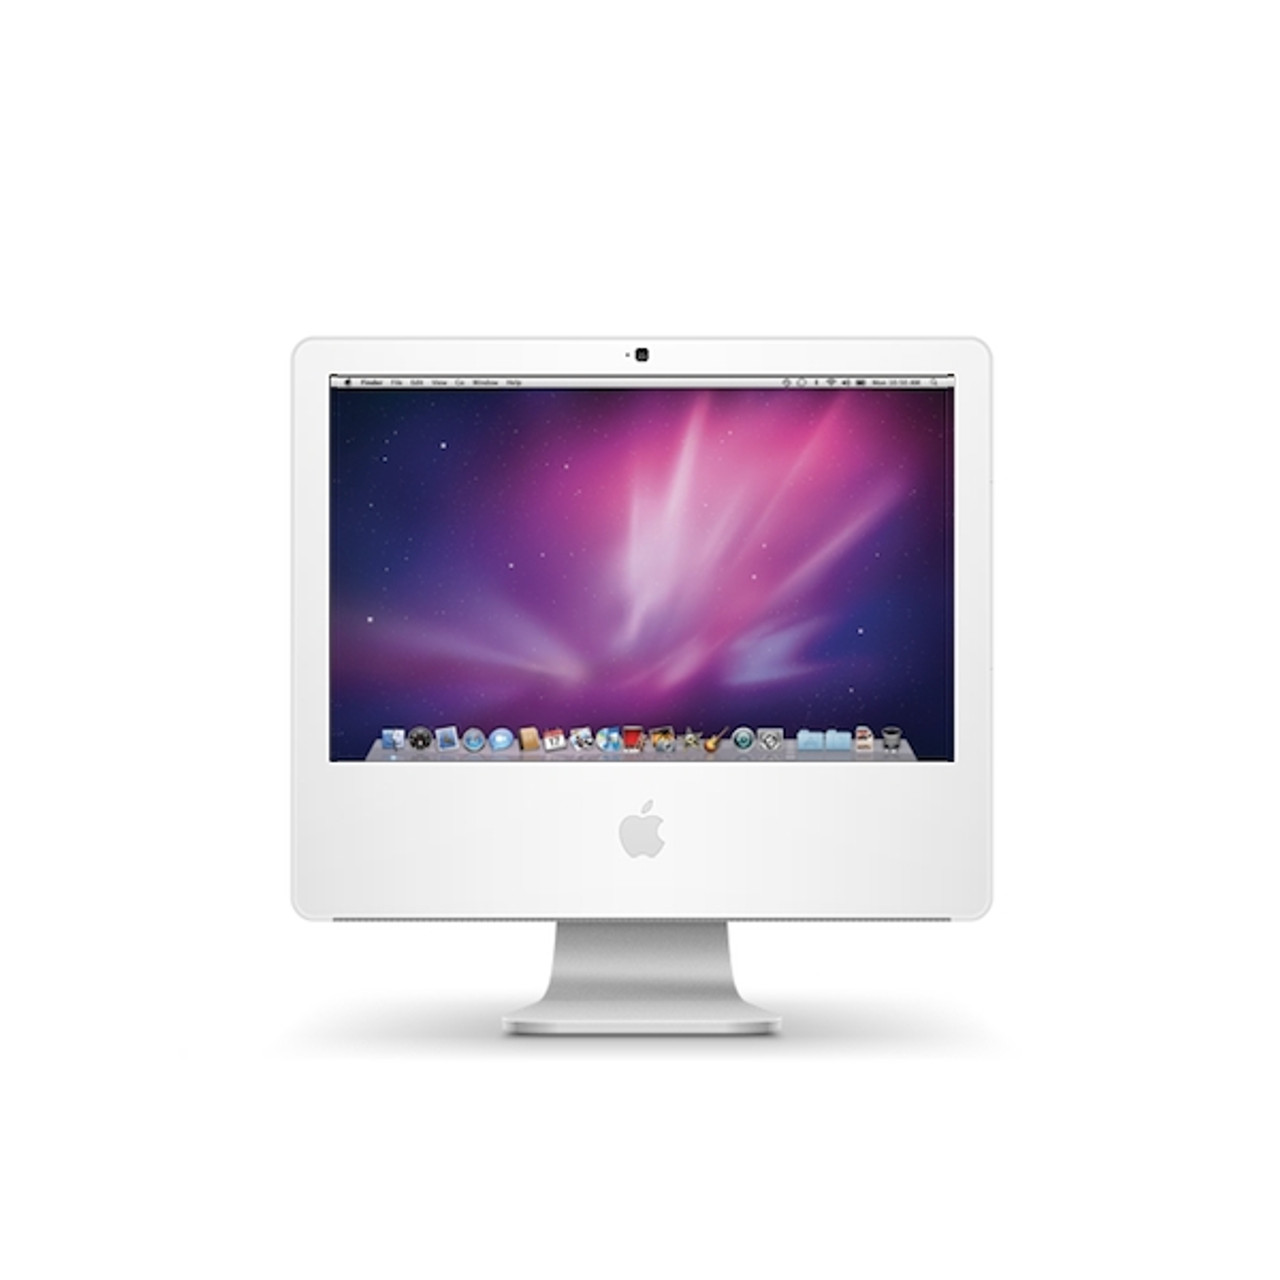 Apple iMac 17-inch, Late 2006 - 1.83GHz Core 2 Duo AIO